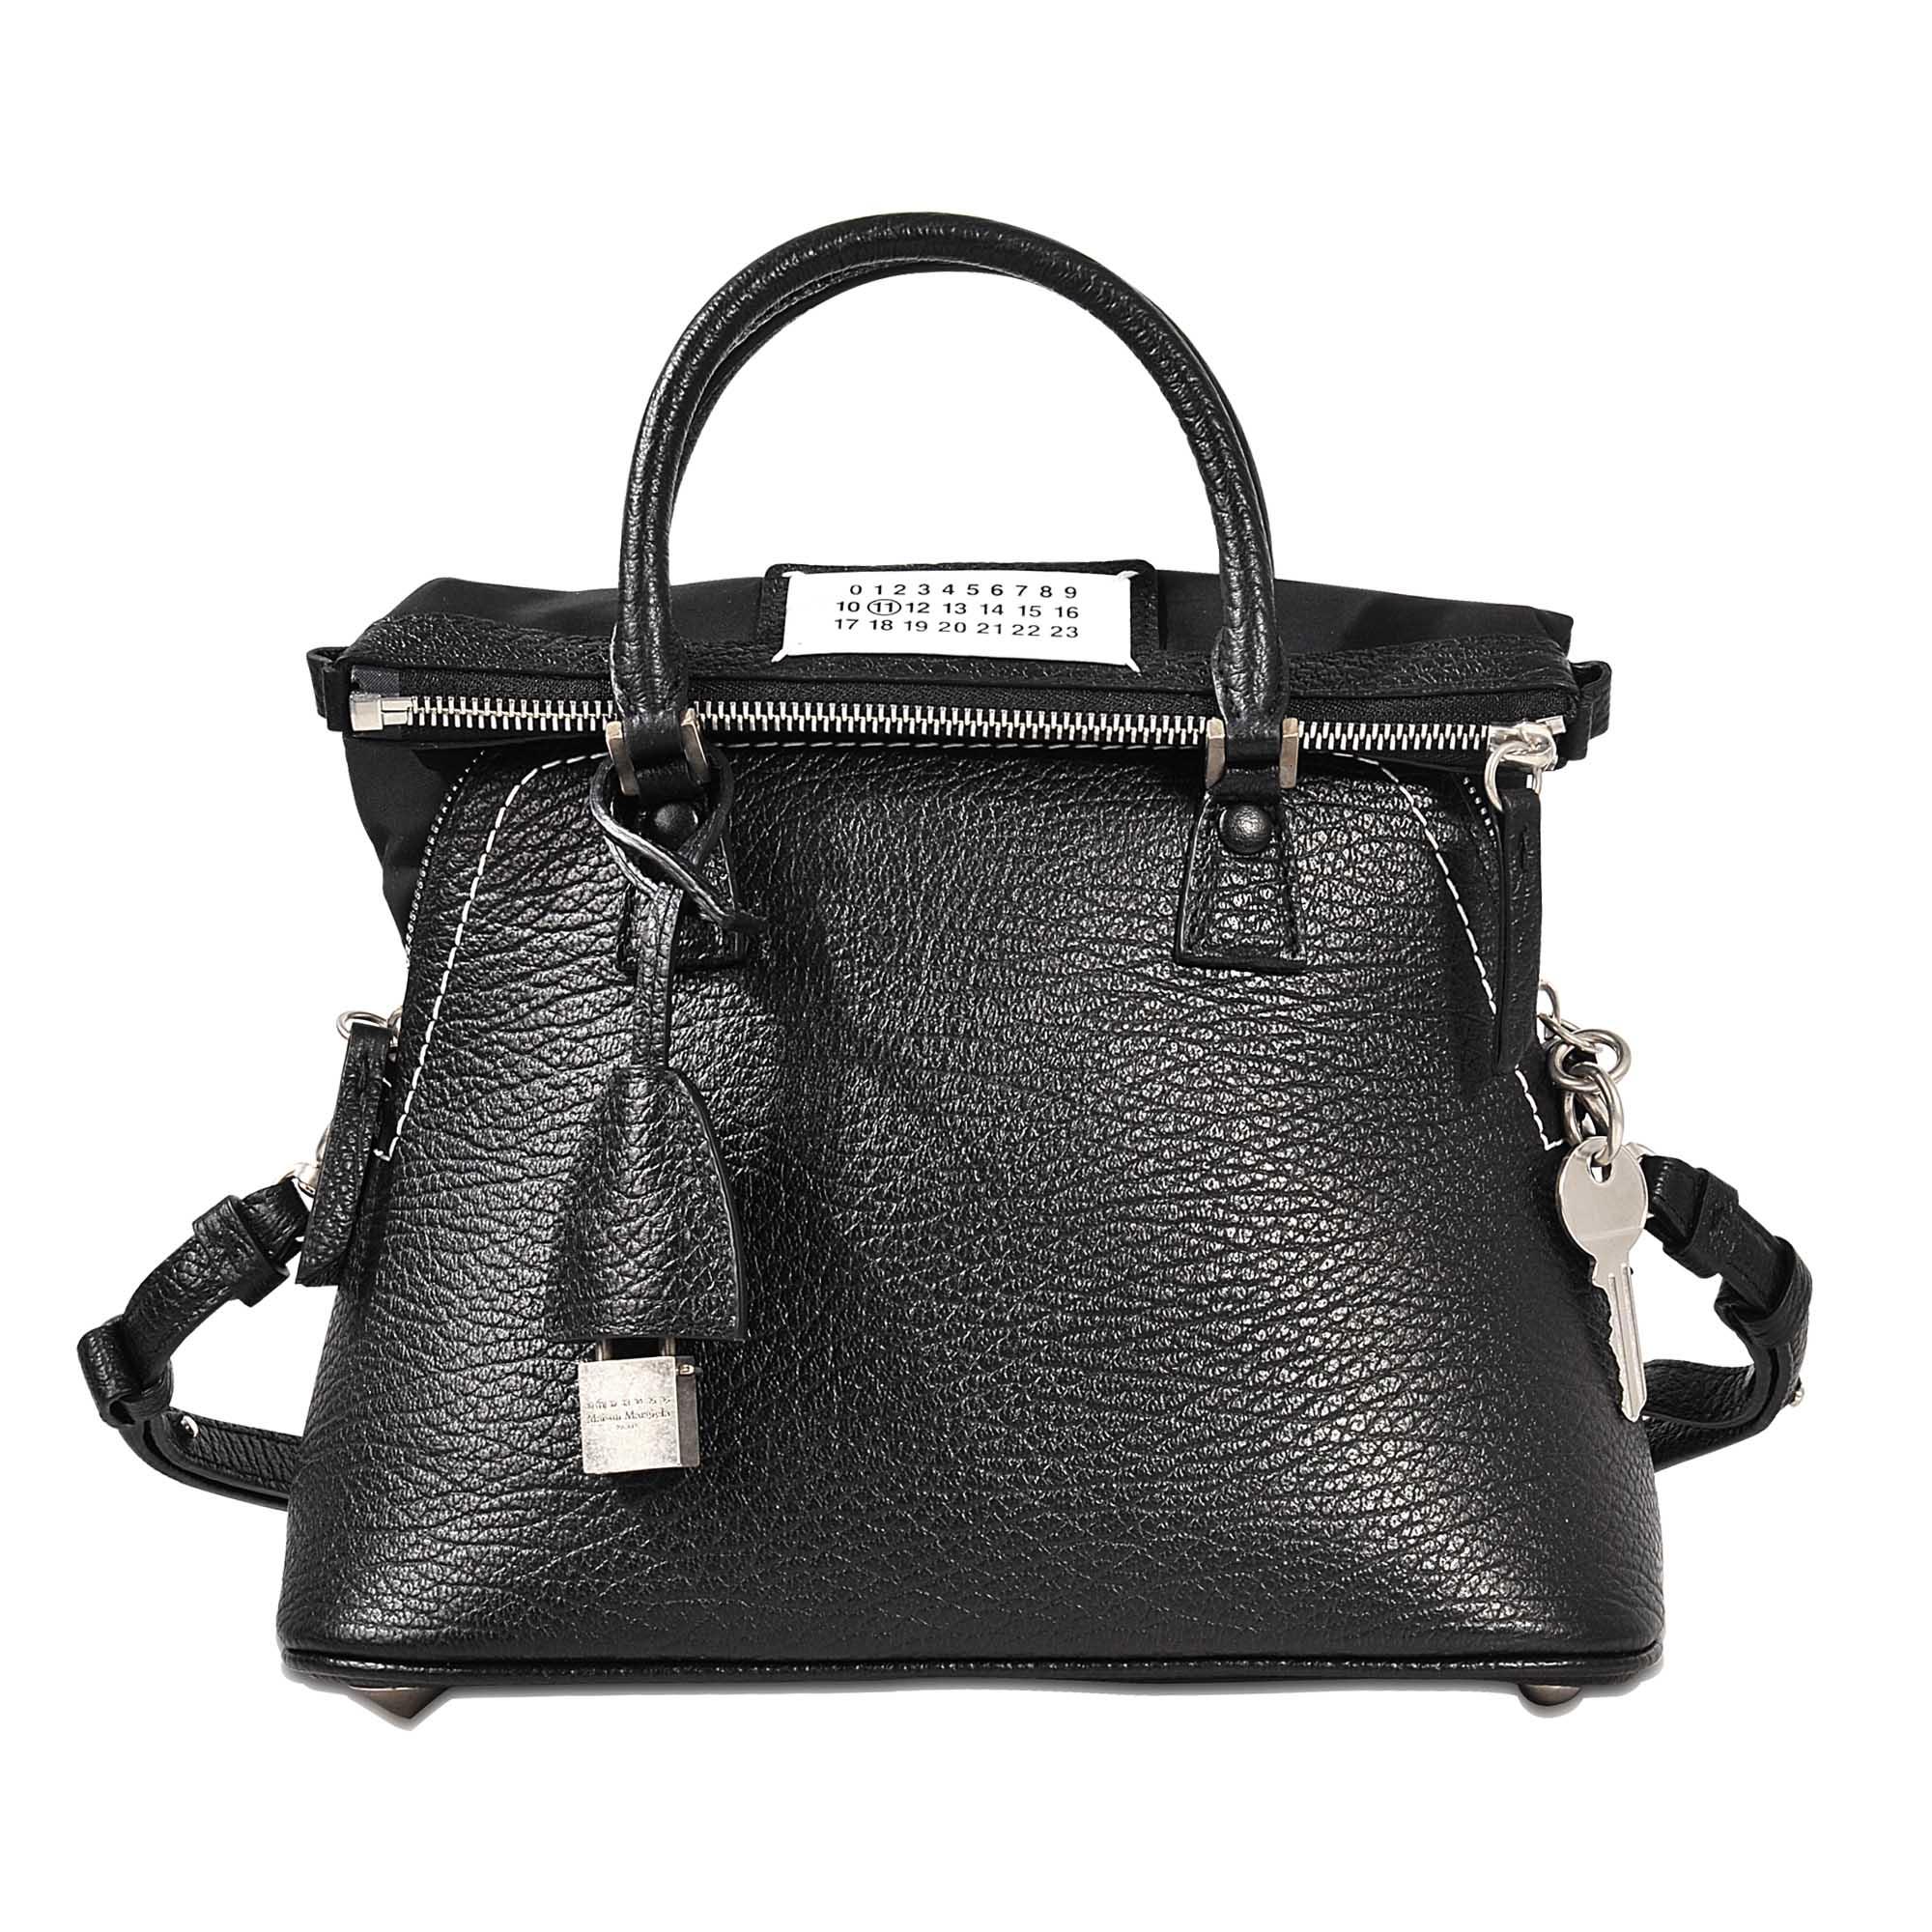 Maison Margiela Leather 5ac Mini Bag in Black - Lyst